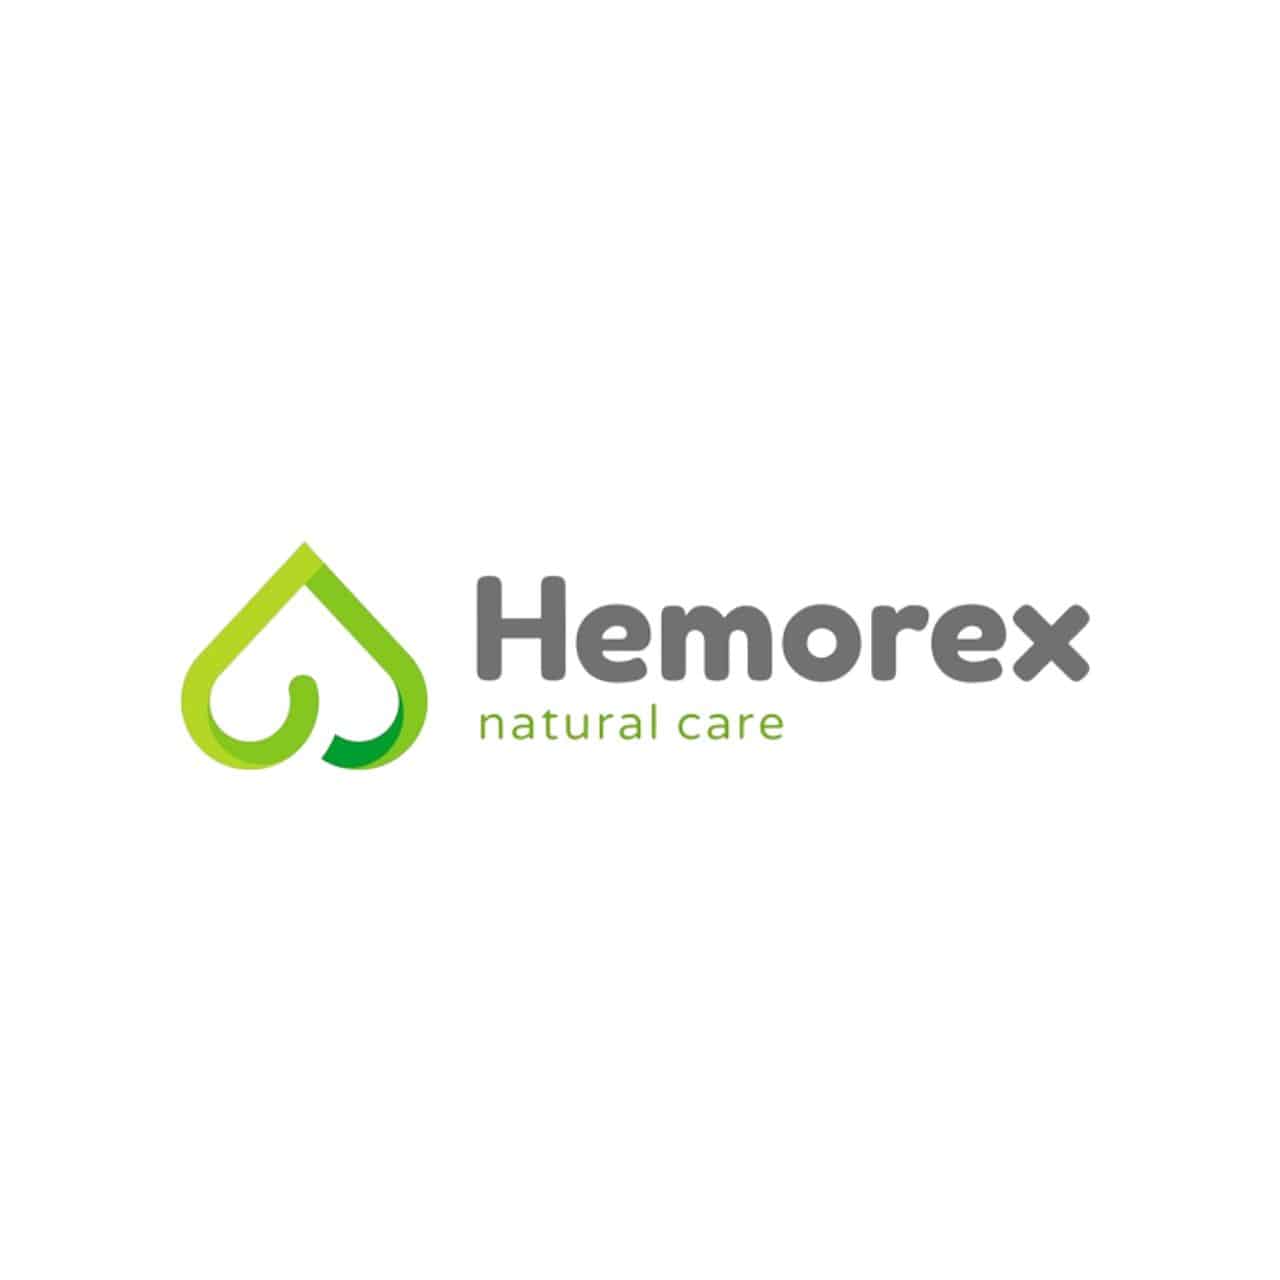 hemorex